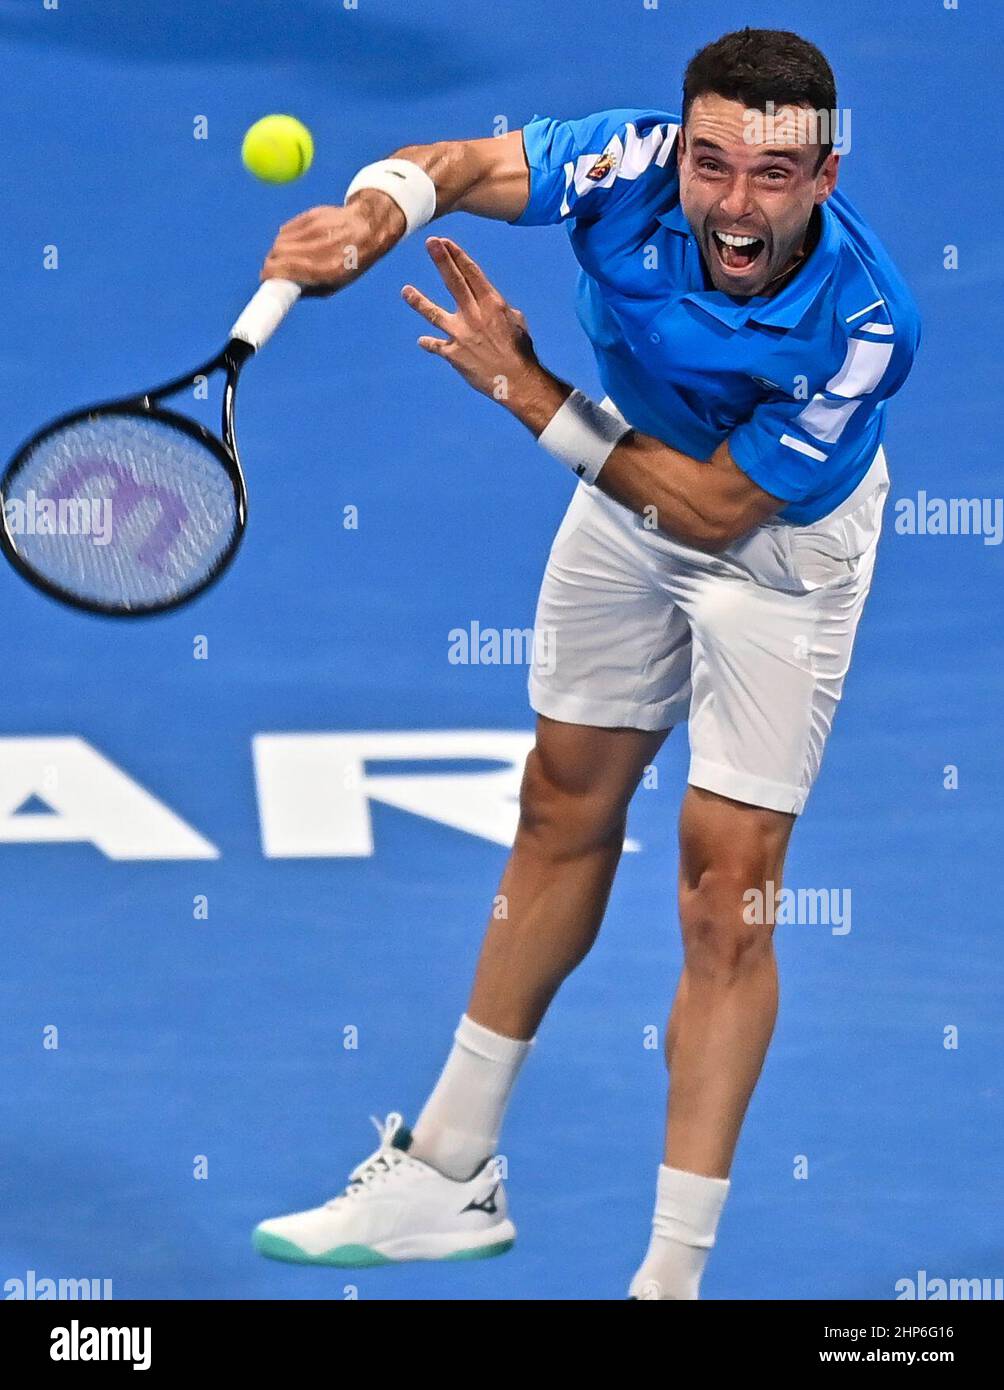 Doha, Qatar. 18th Feb, 2022. Roberto Bautista Agut of Spain serves during  the semifinal of ATP Qatar Open tennis match against Karen Khachanov of  Russia at Khalifa International Tennis Complex in Doha,